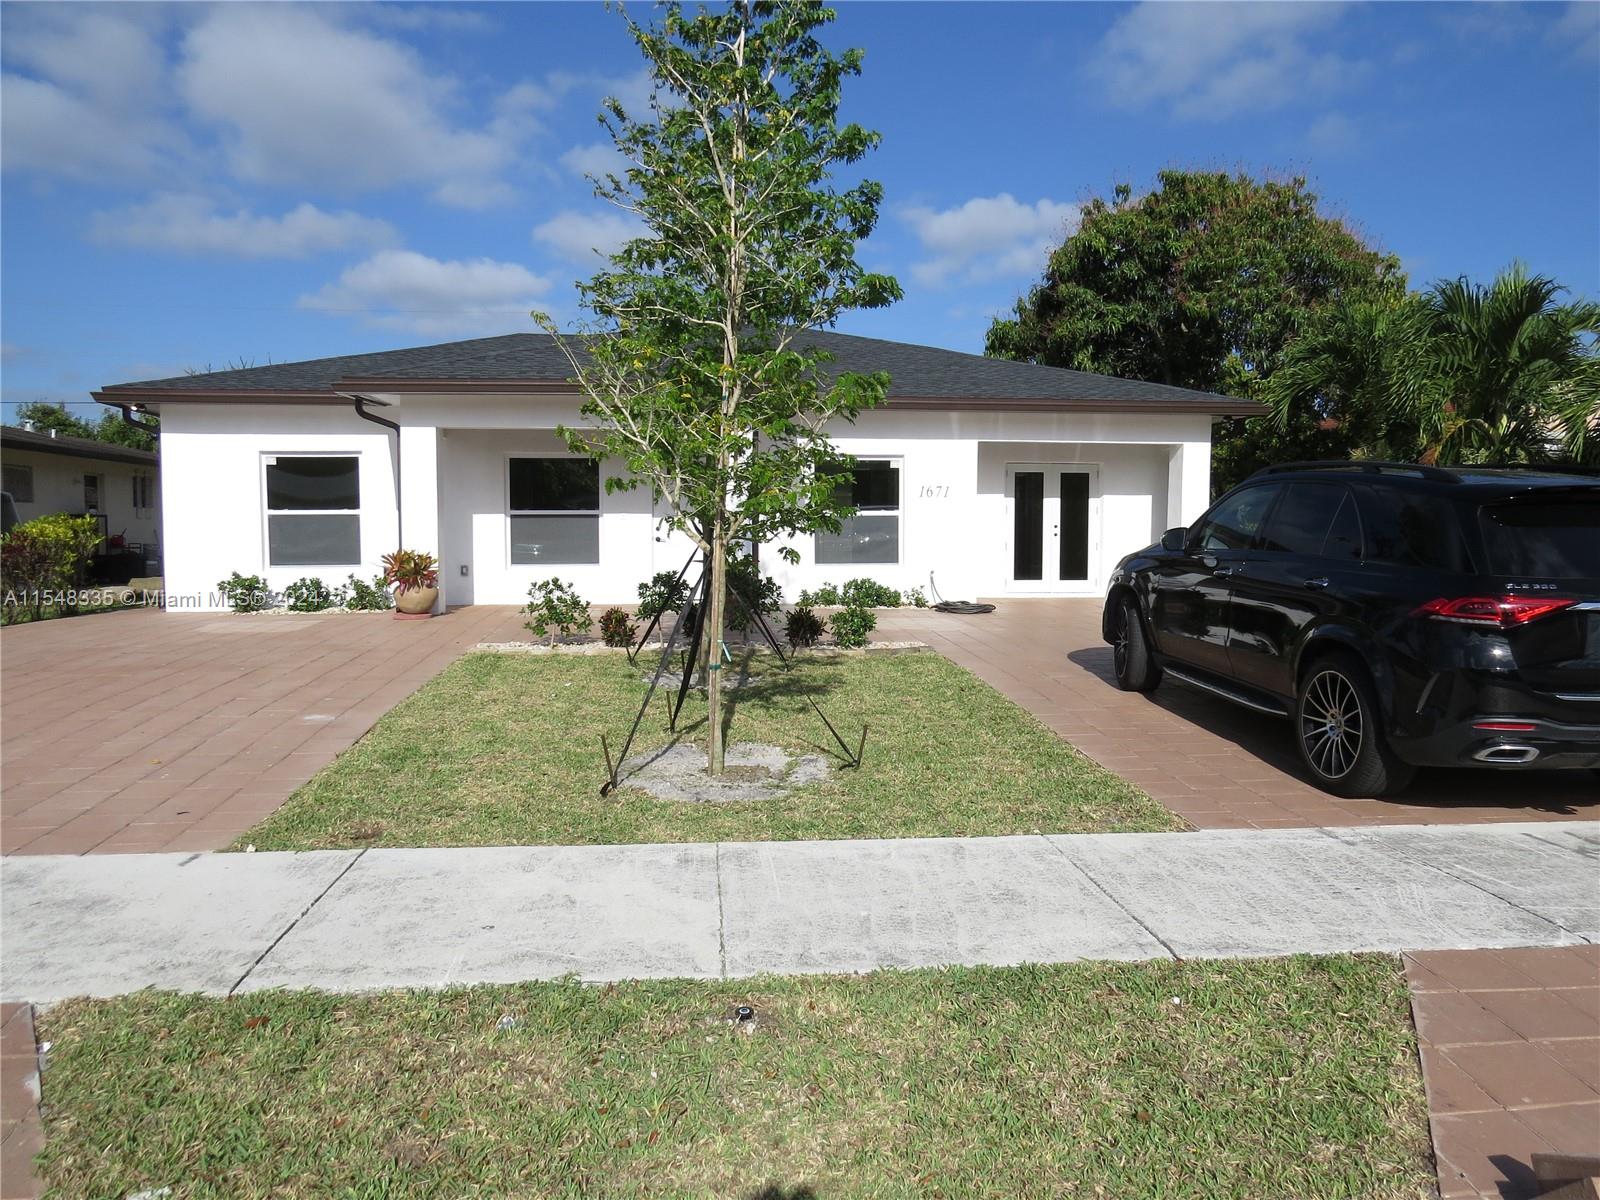 Rental Property at 1671 Sw 44th Ter, Fort Lauderdale, Broward County, Florida -  - $1,100,000 MO.